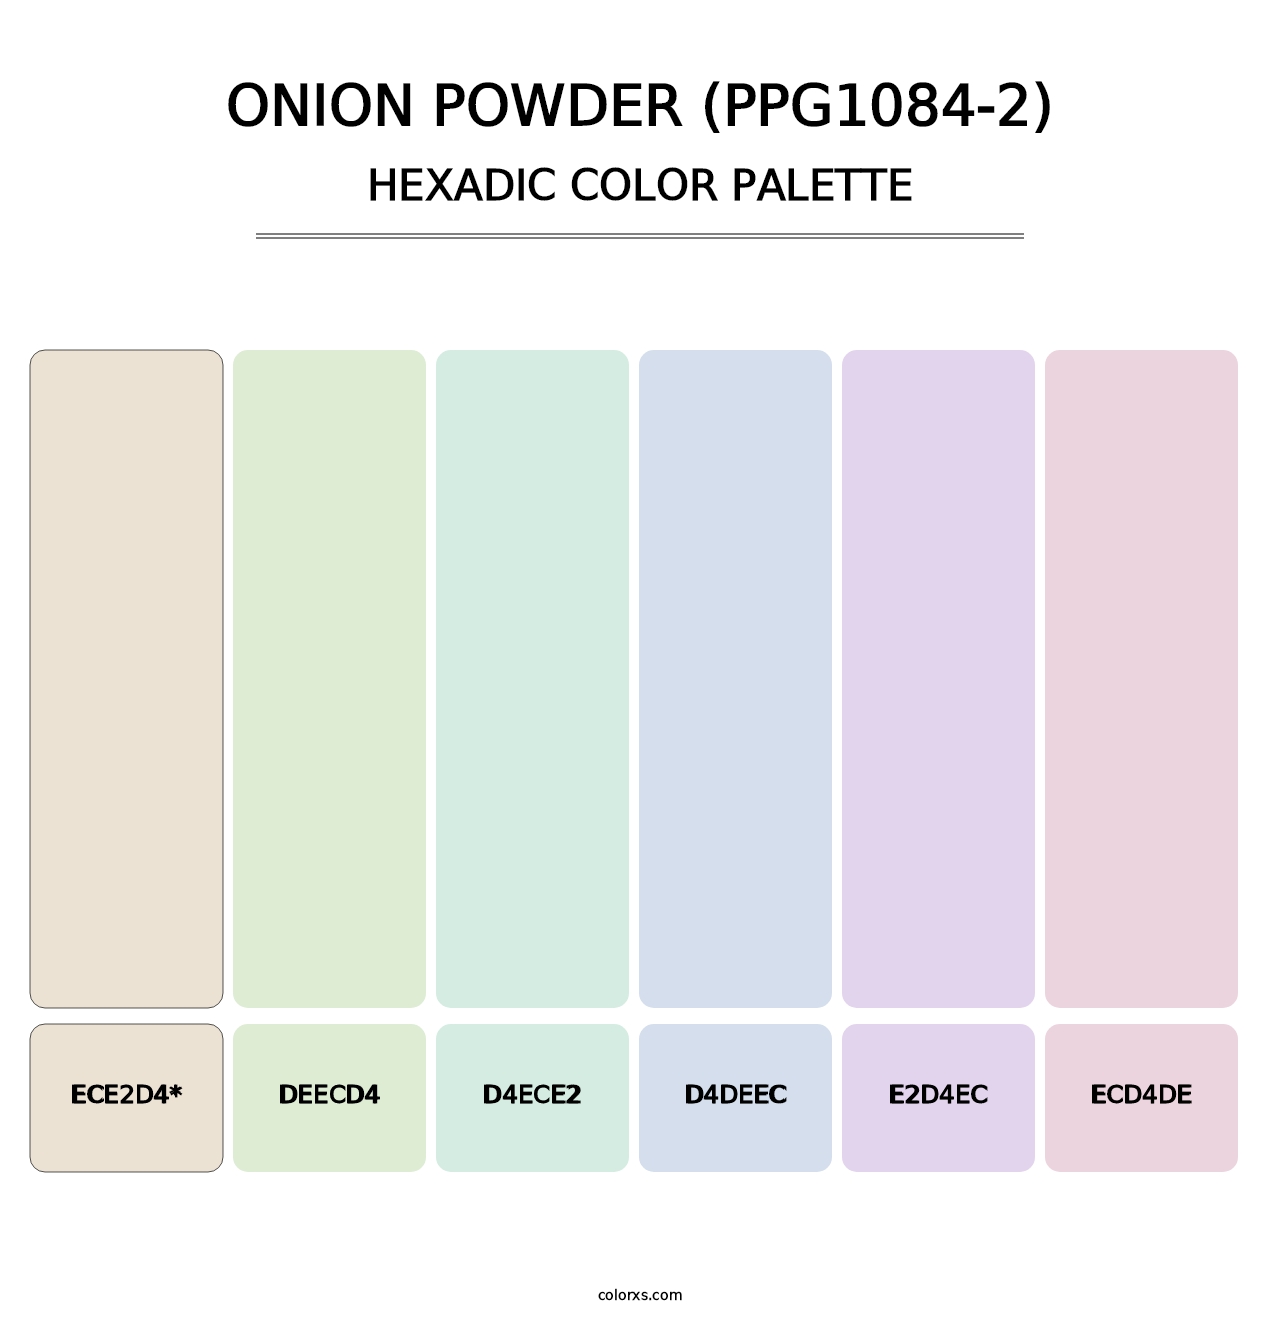 Onion Powder (PPG1084-2) - Hexadic Color Palette